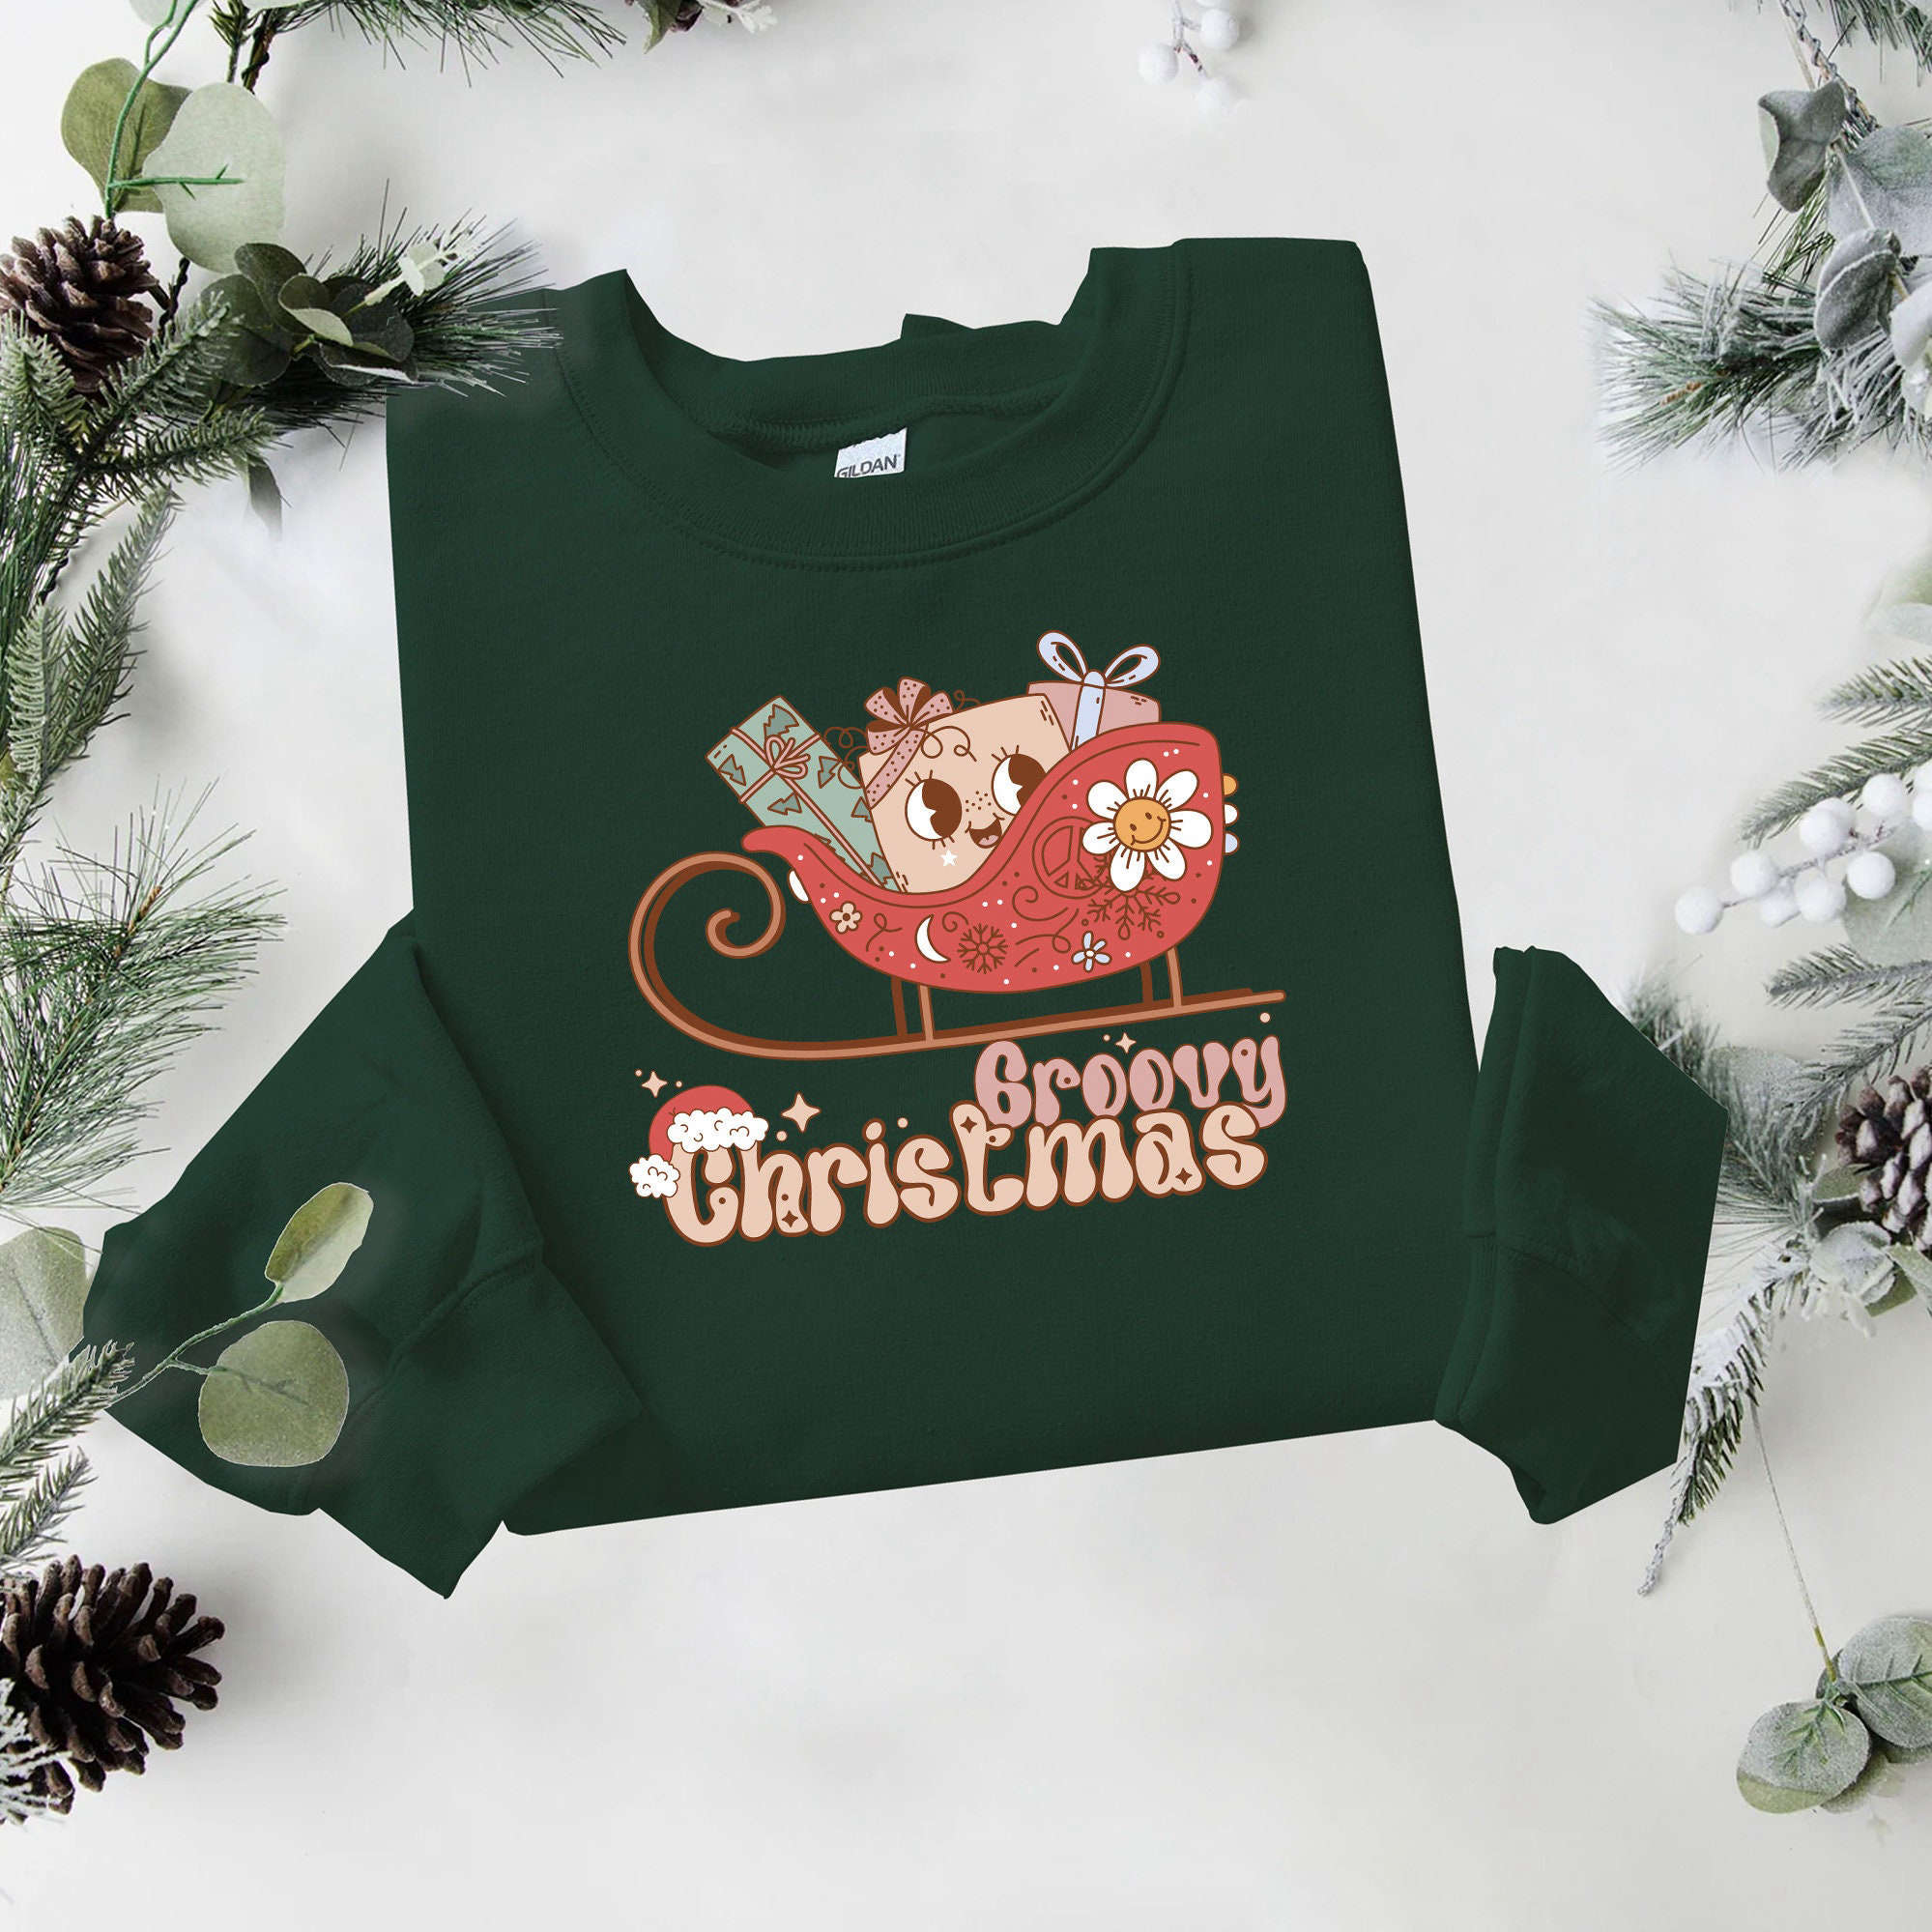 Groovy Christmas Shirt, Christmas Sweatshirt, Womens Christmas Shirt, Christmas Gift, Christmas Sweater, Holiday Retro Sw eatshirt, Vintage